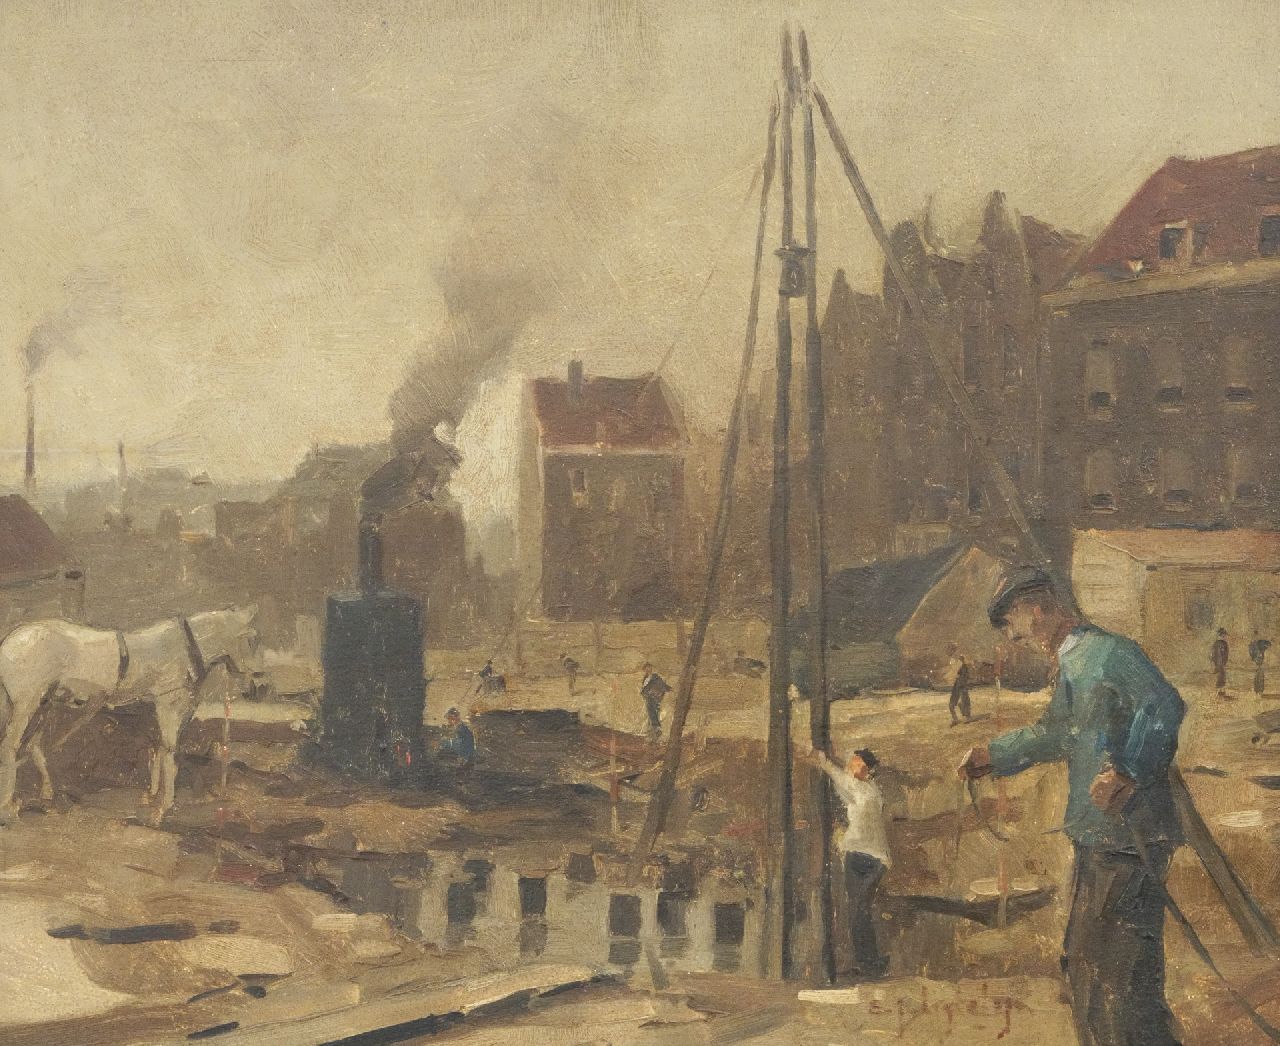 Ligtelijn E.J.  | Evert Jan Ligtelijn, Construction site in Amsterdam, oil on panel 39.8 x 47.9 cm, signed l.r.